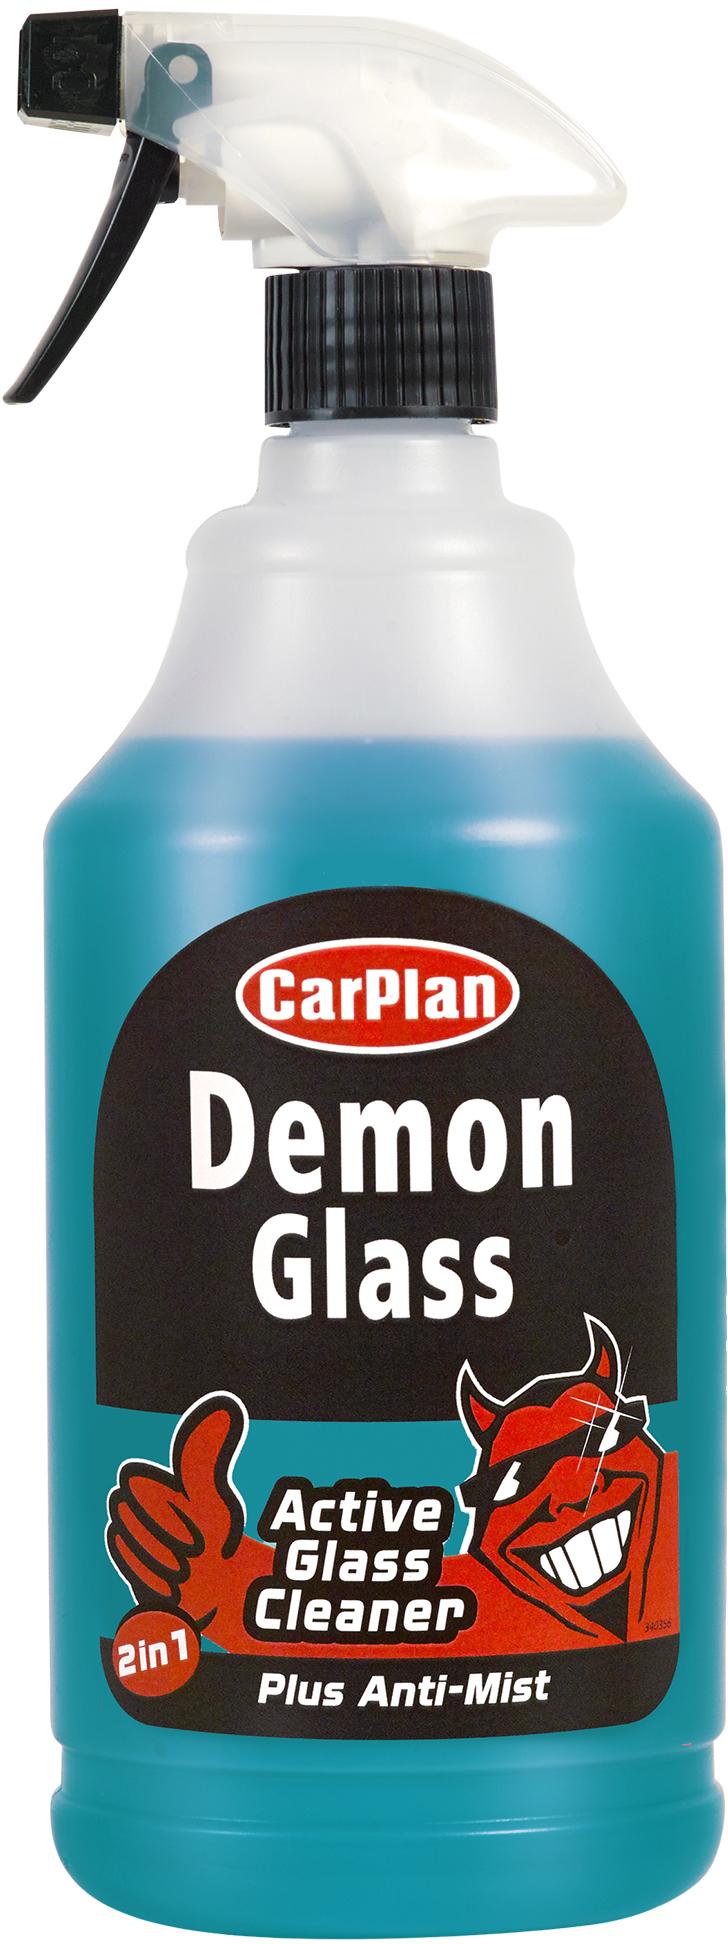 Carplan Demon Glass 1L